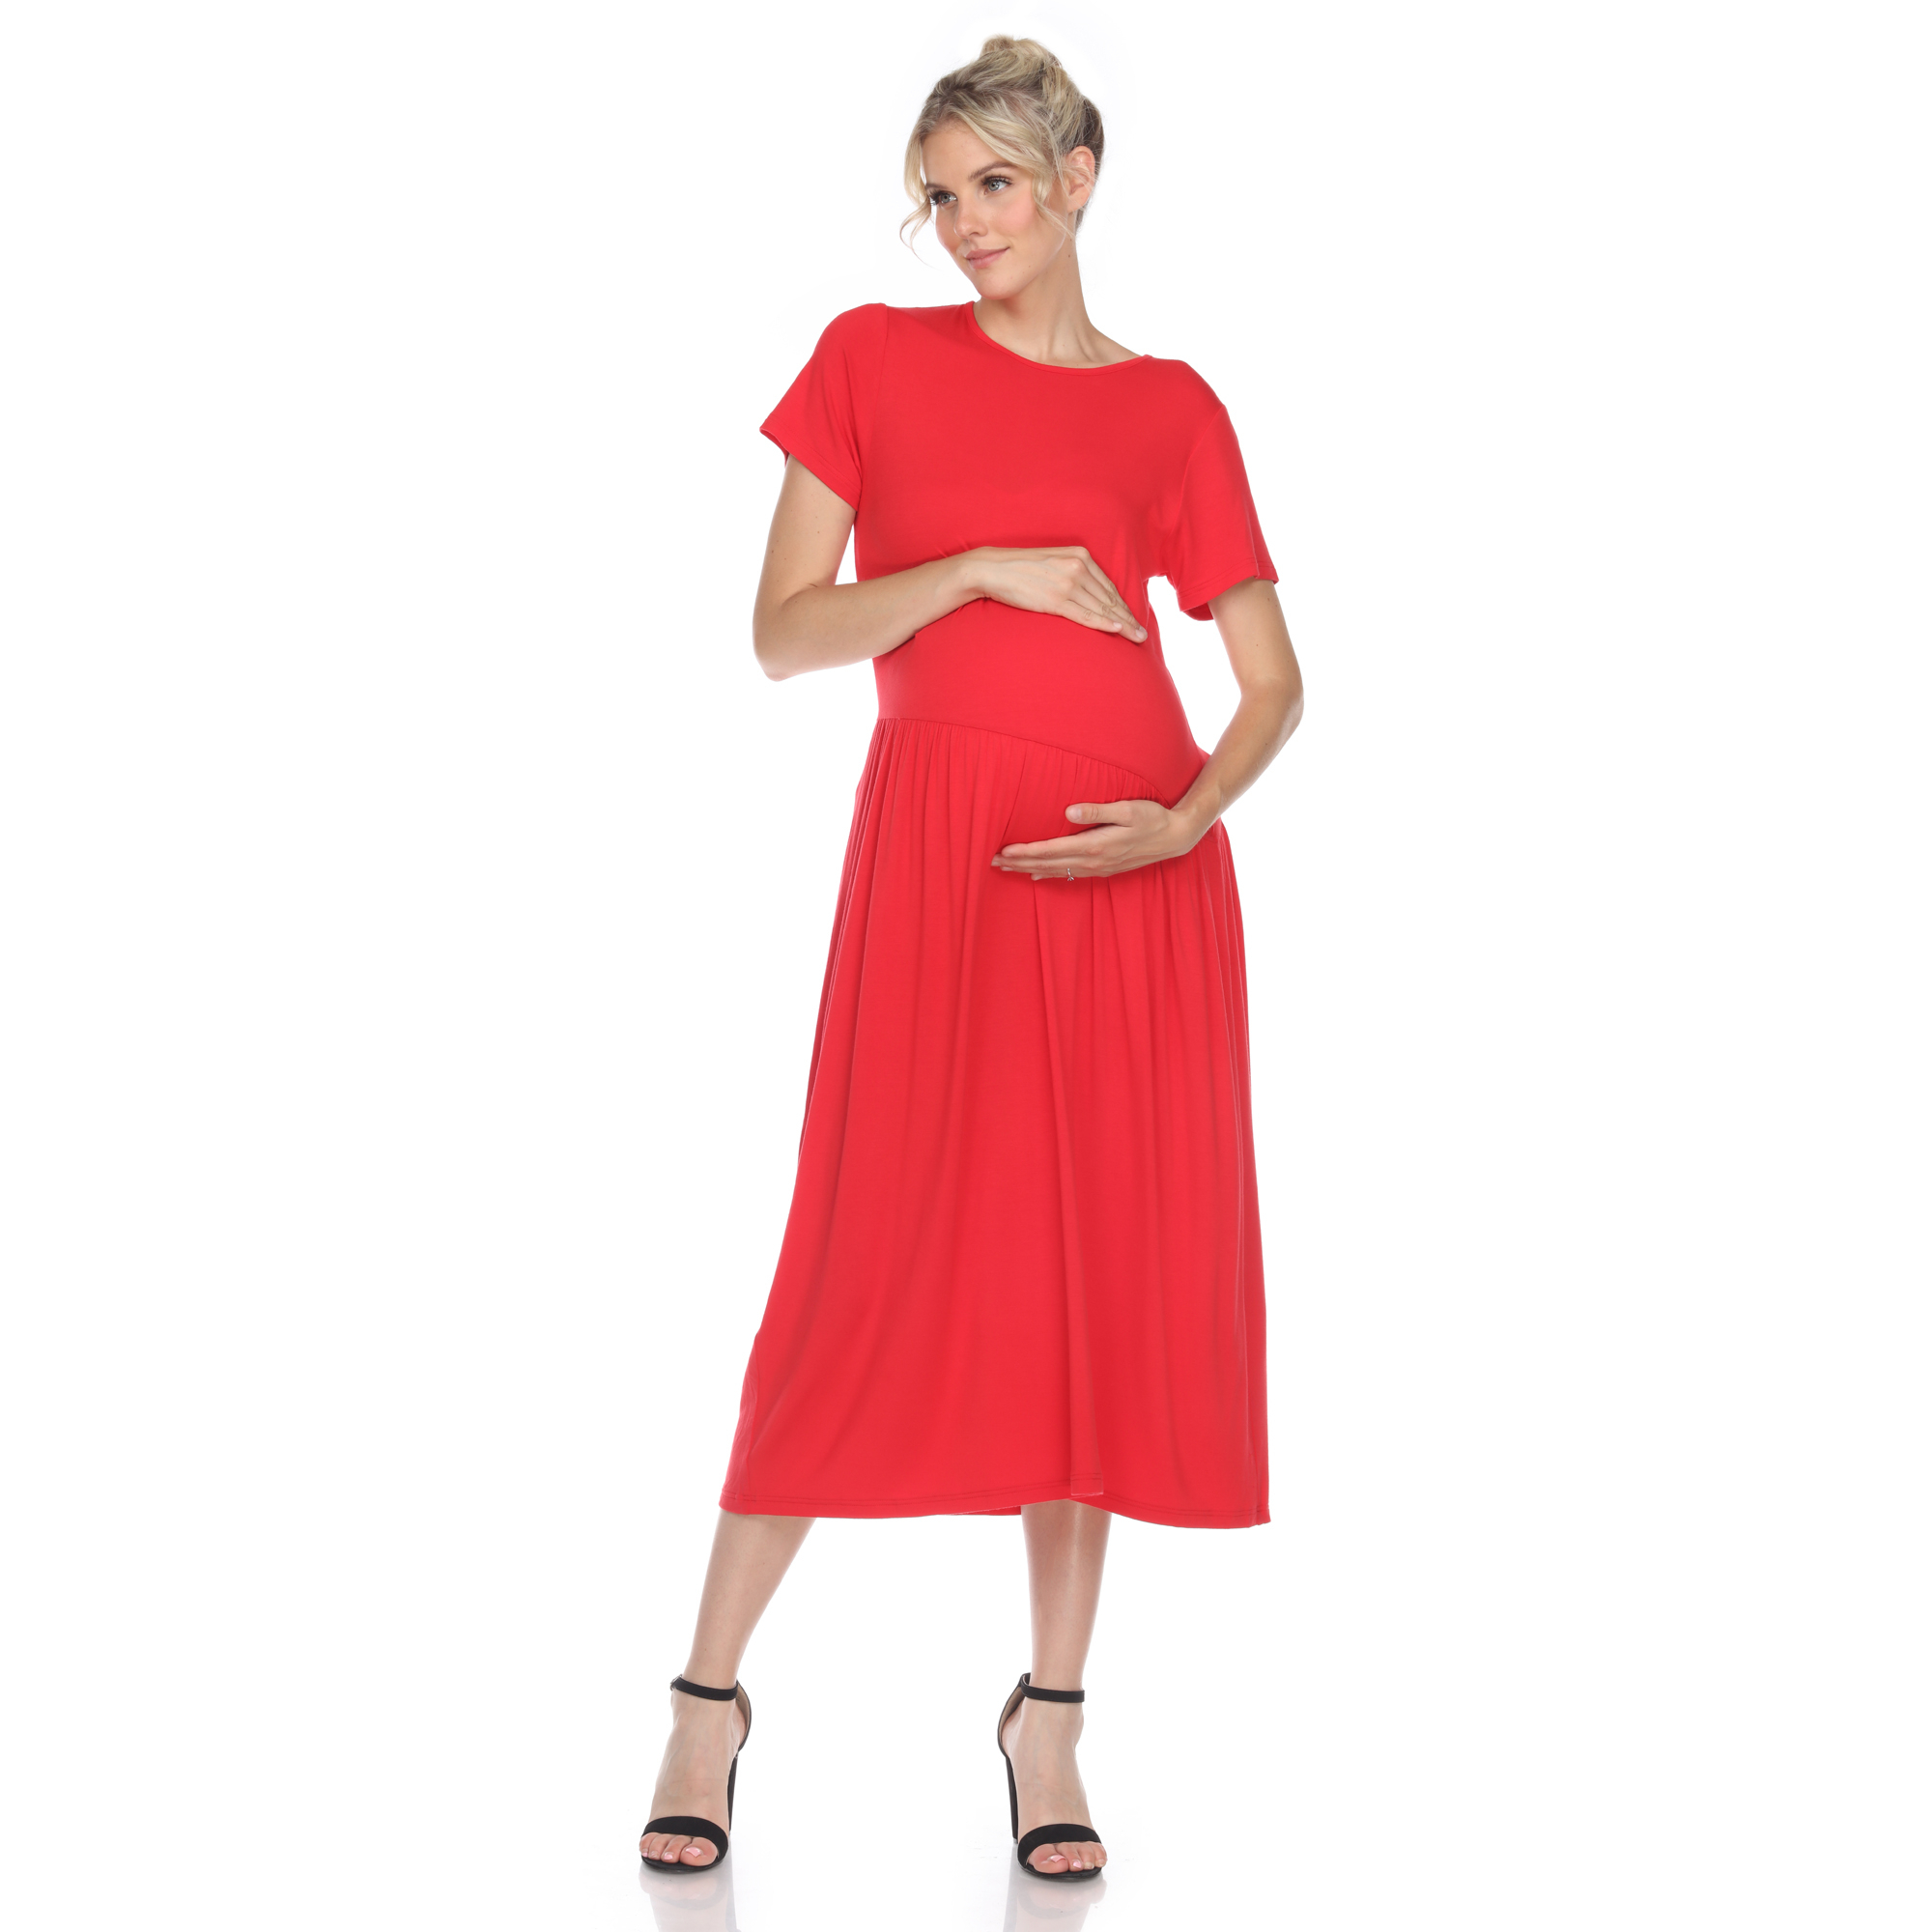 White Mark Womenâs Maternity Short Sleeve Maxi Dress - Red, 1X